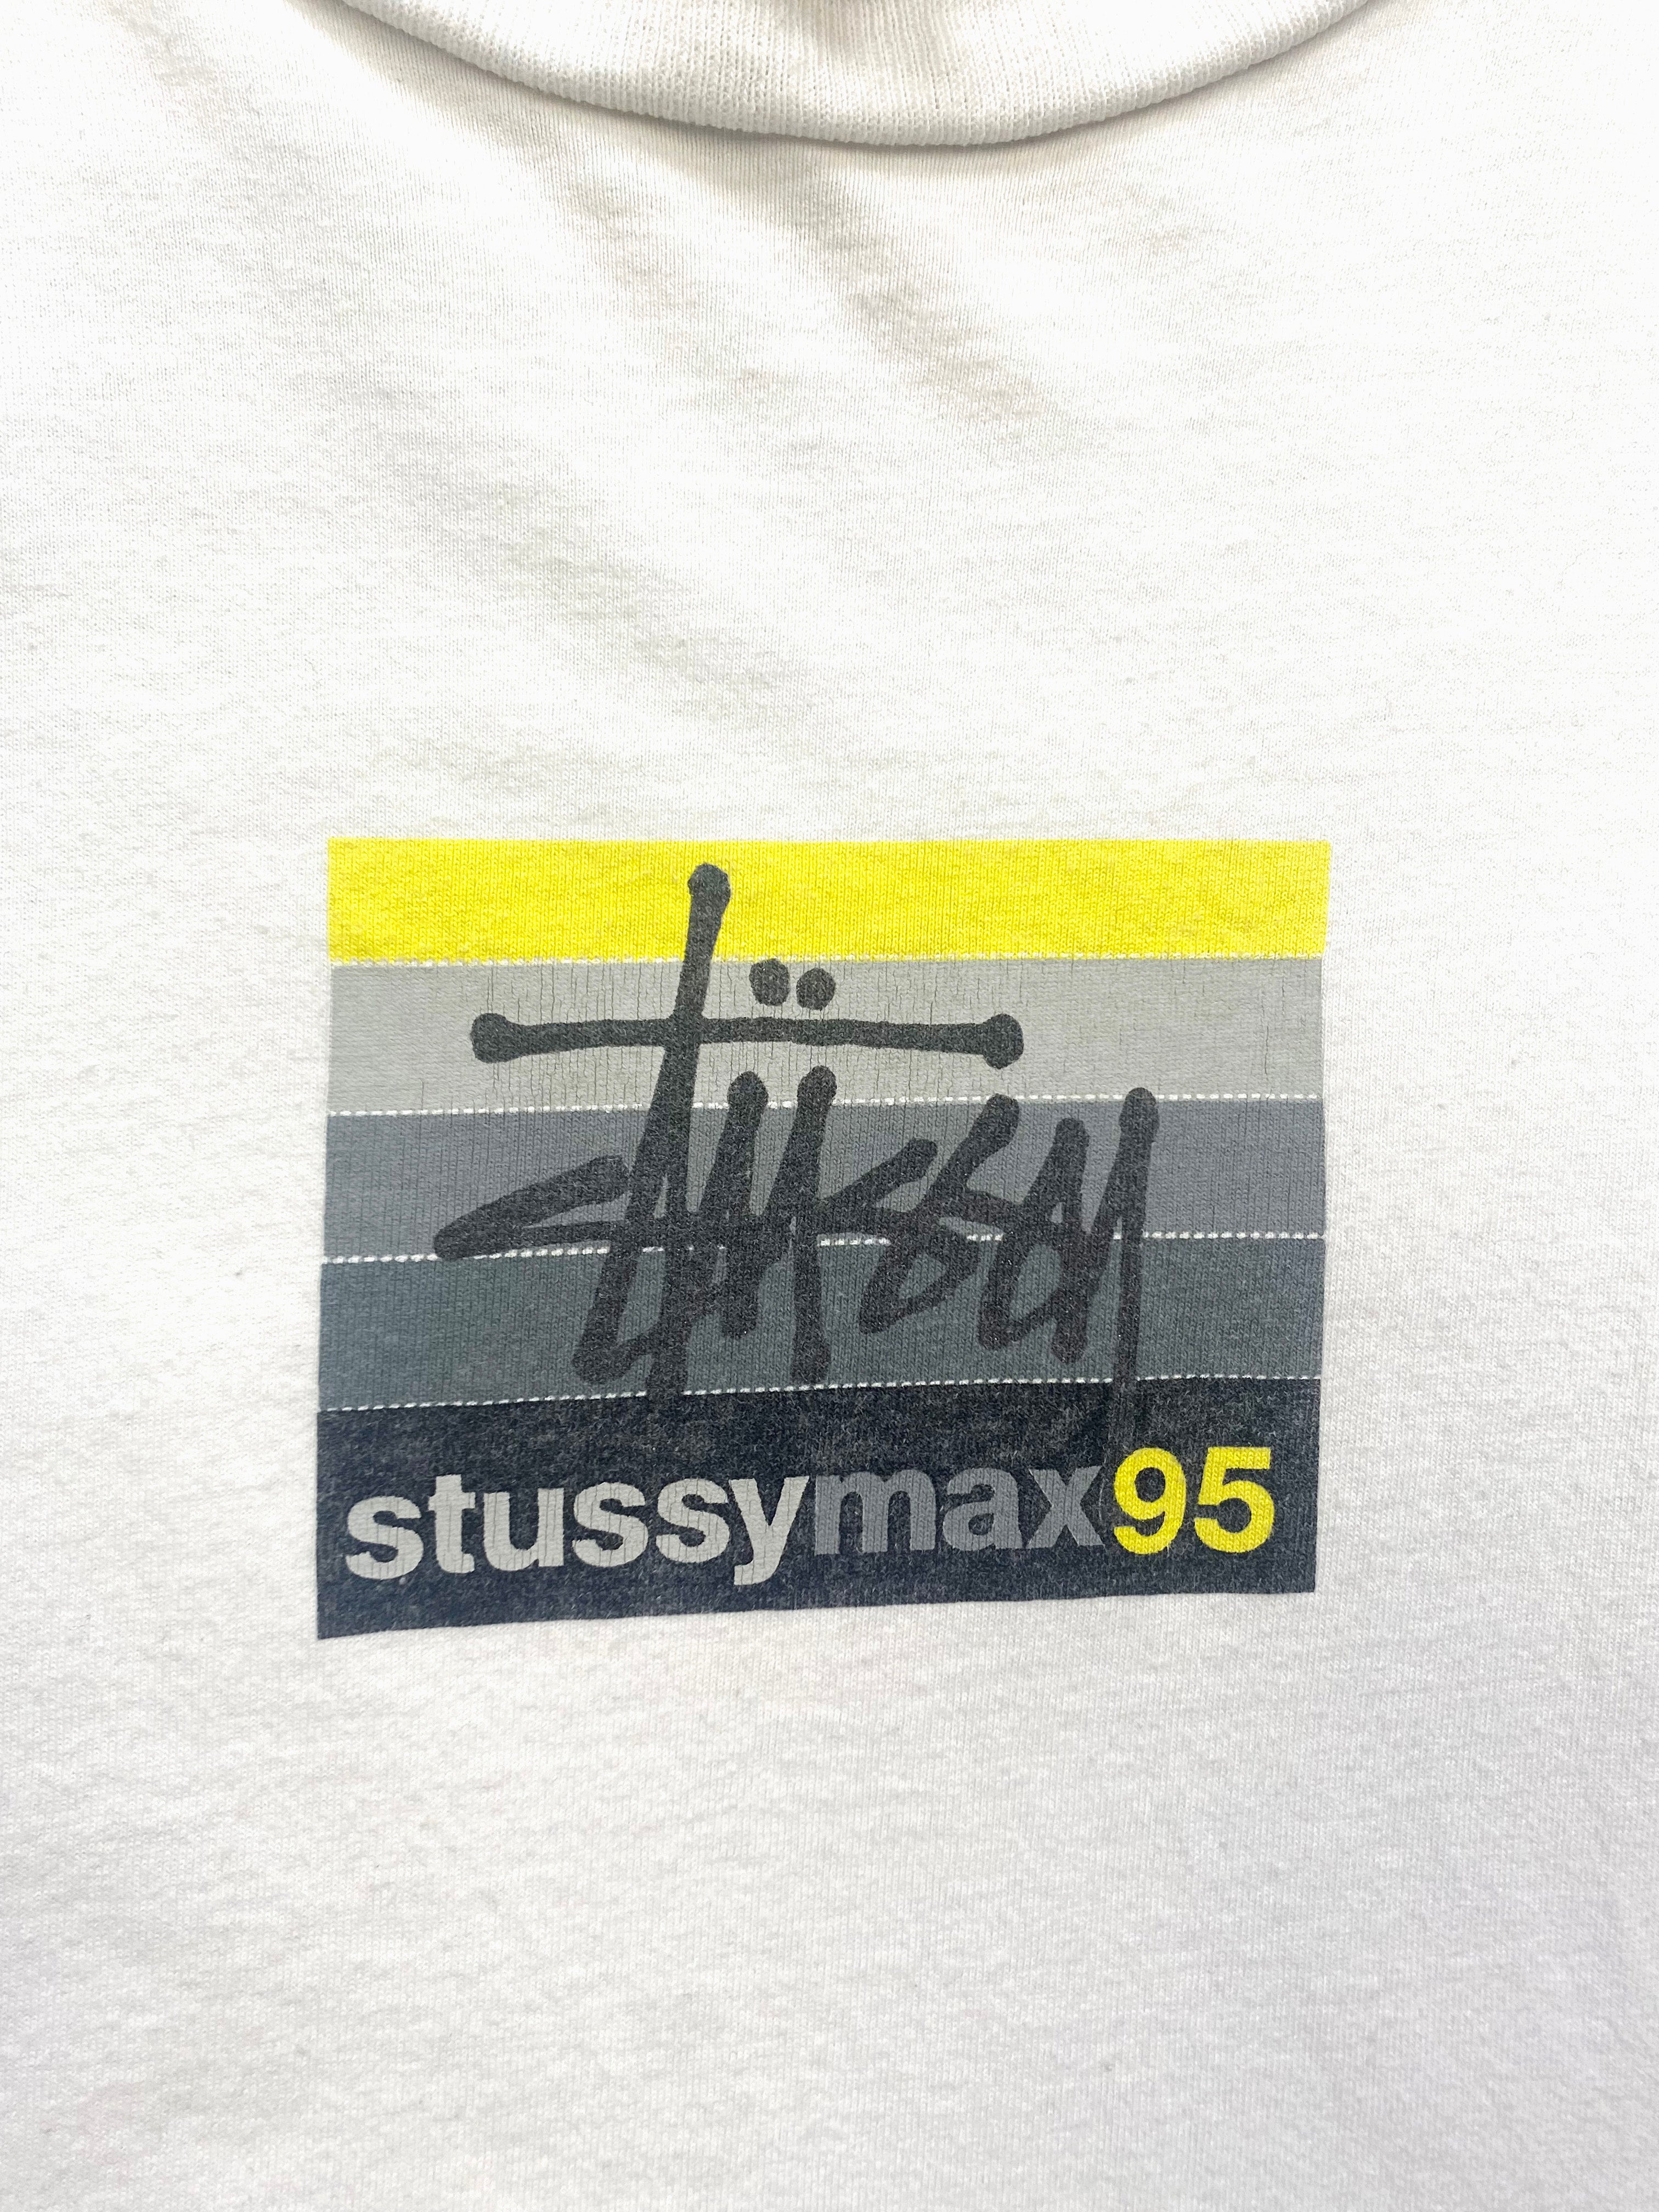 Stussy White Air Max 95 T-shirt 90's